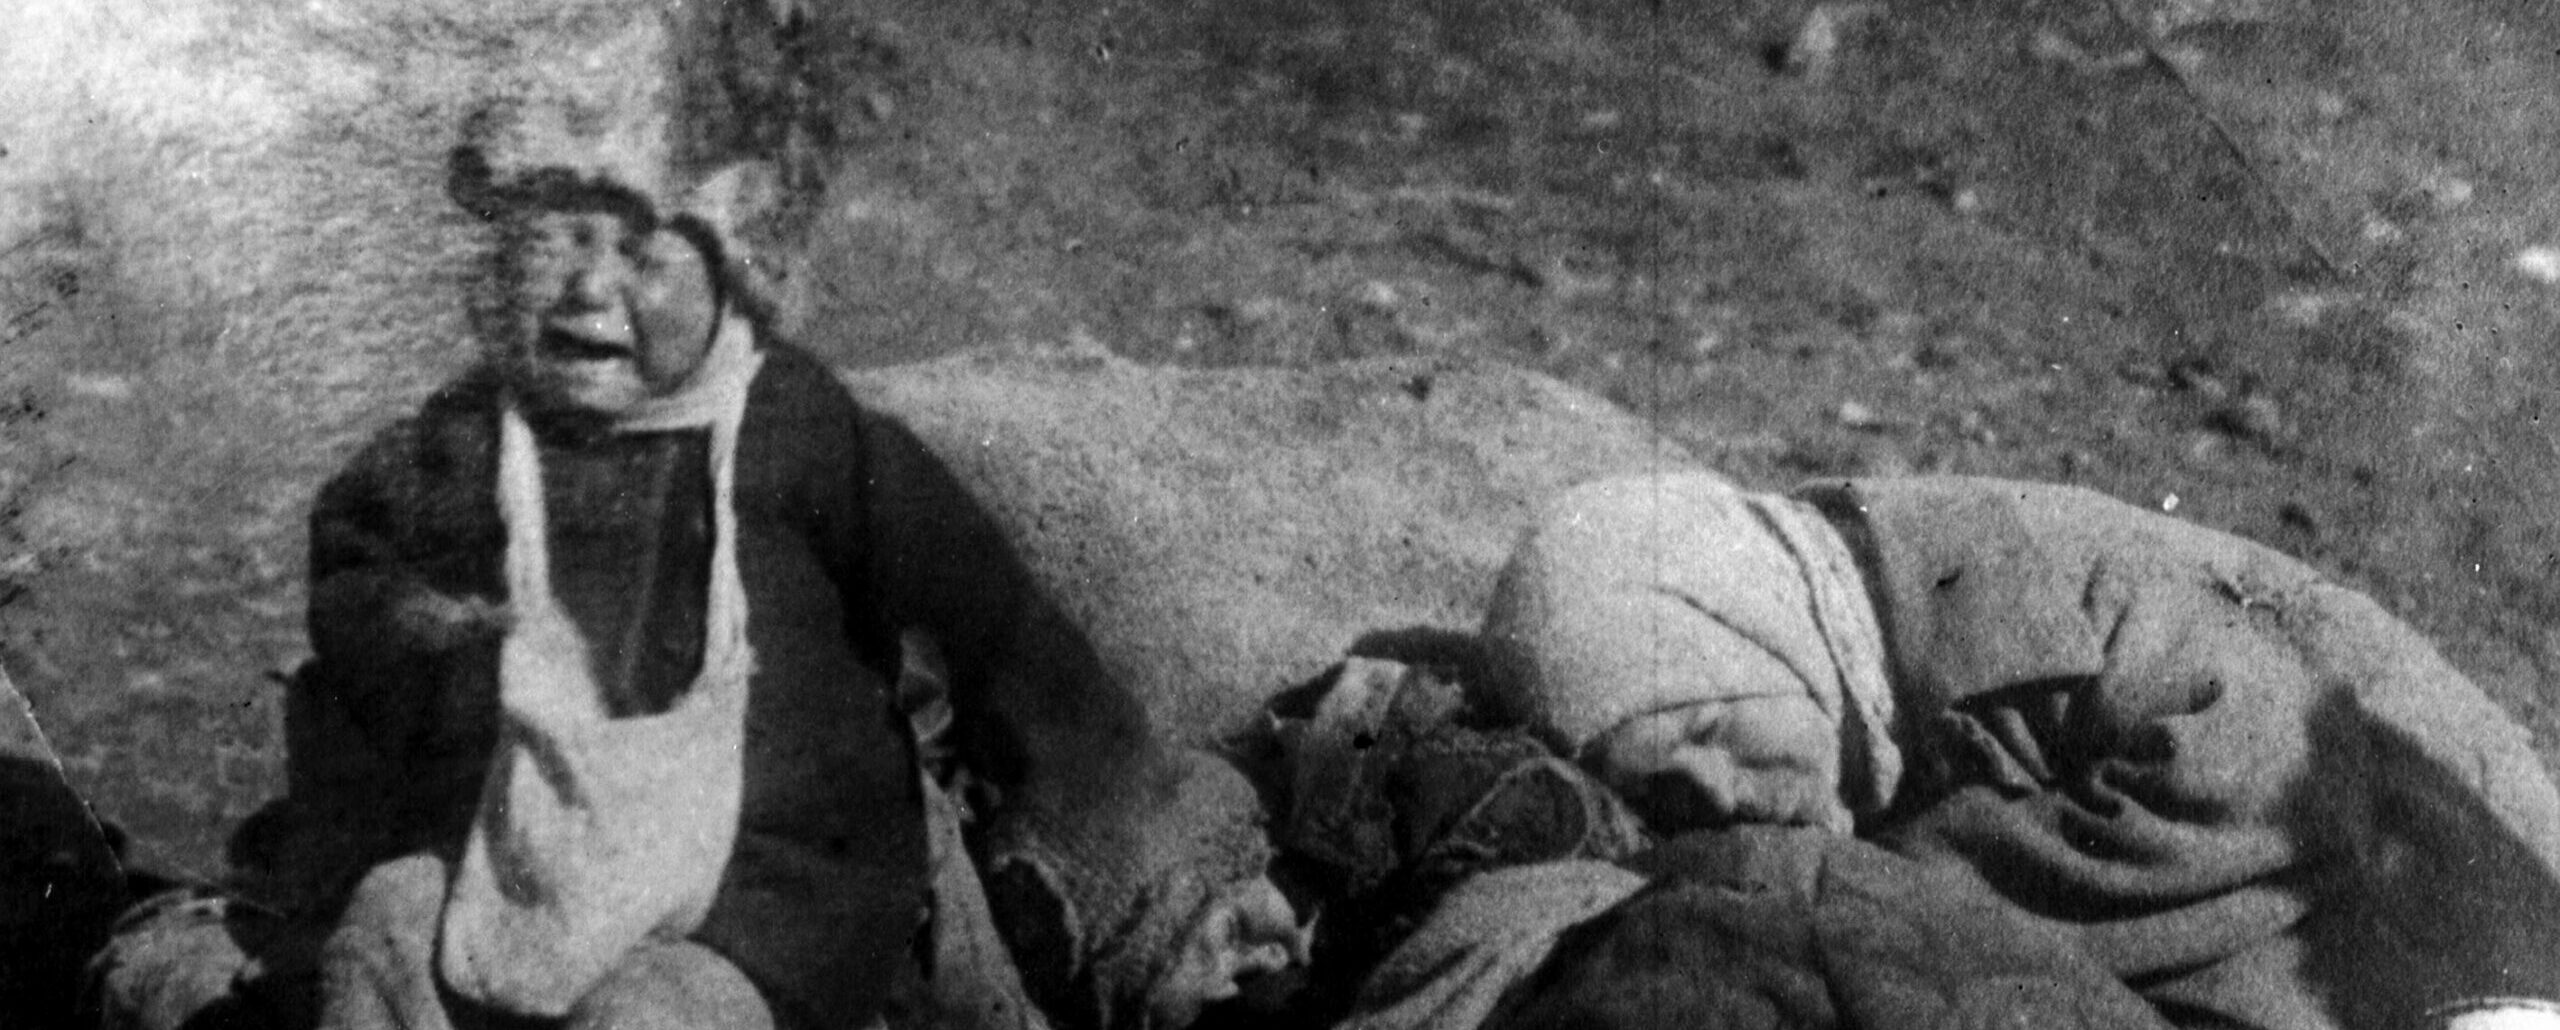 [VIDEO] Holodomor : la grande famine ukrainienne